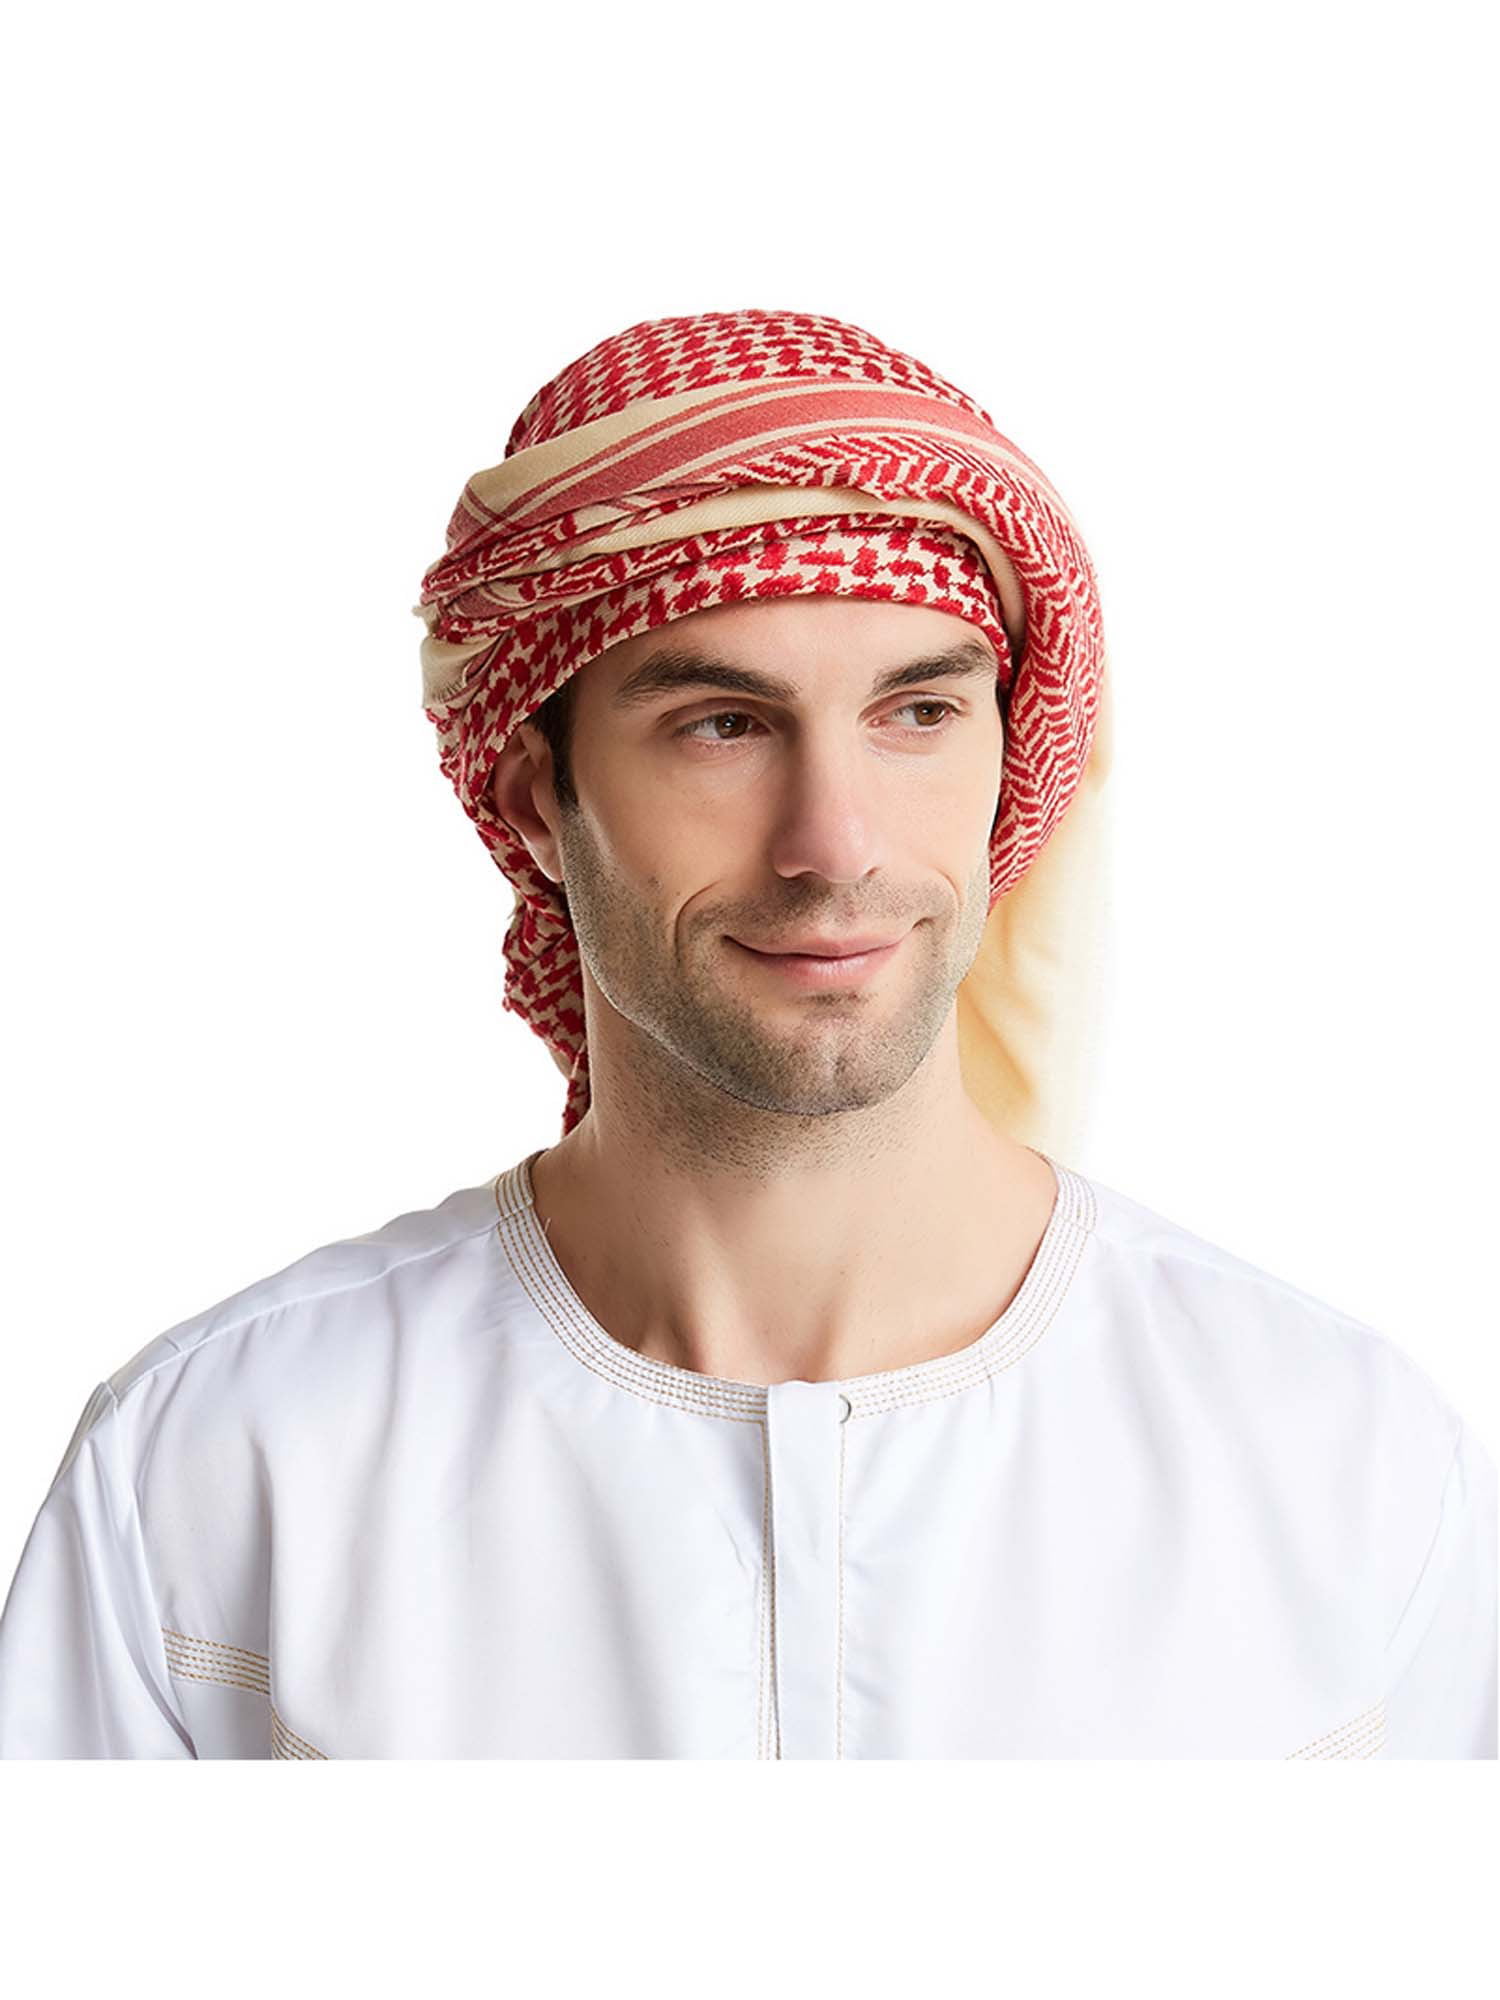 Lallc - Men Muslim Hijab Scarf Turban Islamic Keffiyeh Arab Headwrap